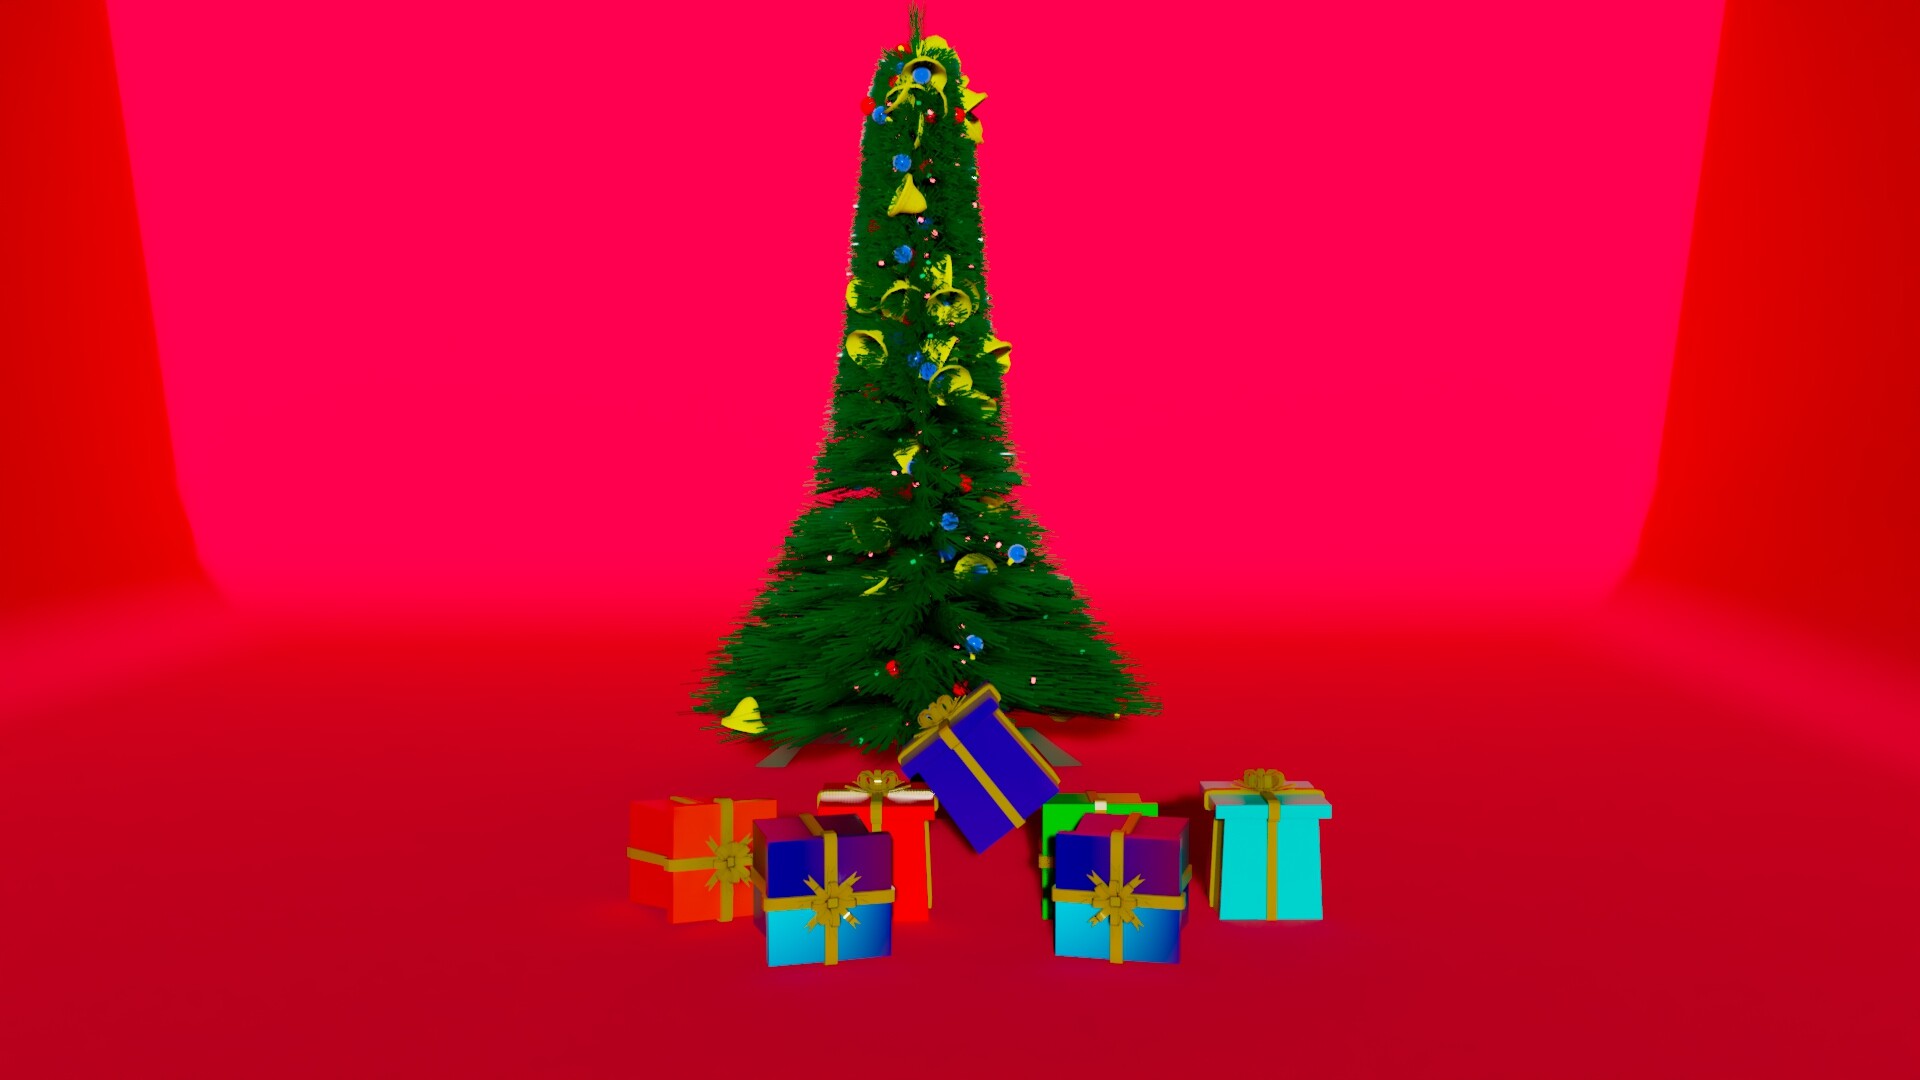 ArtStation - Christmas tree